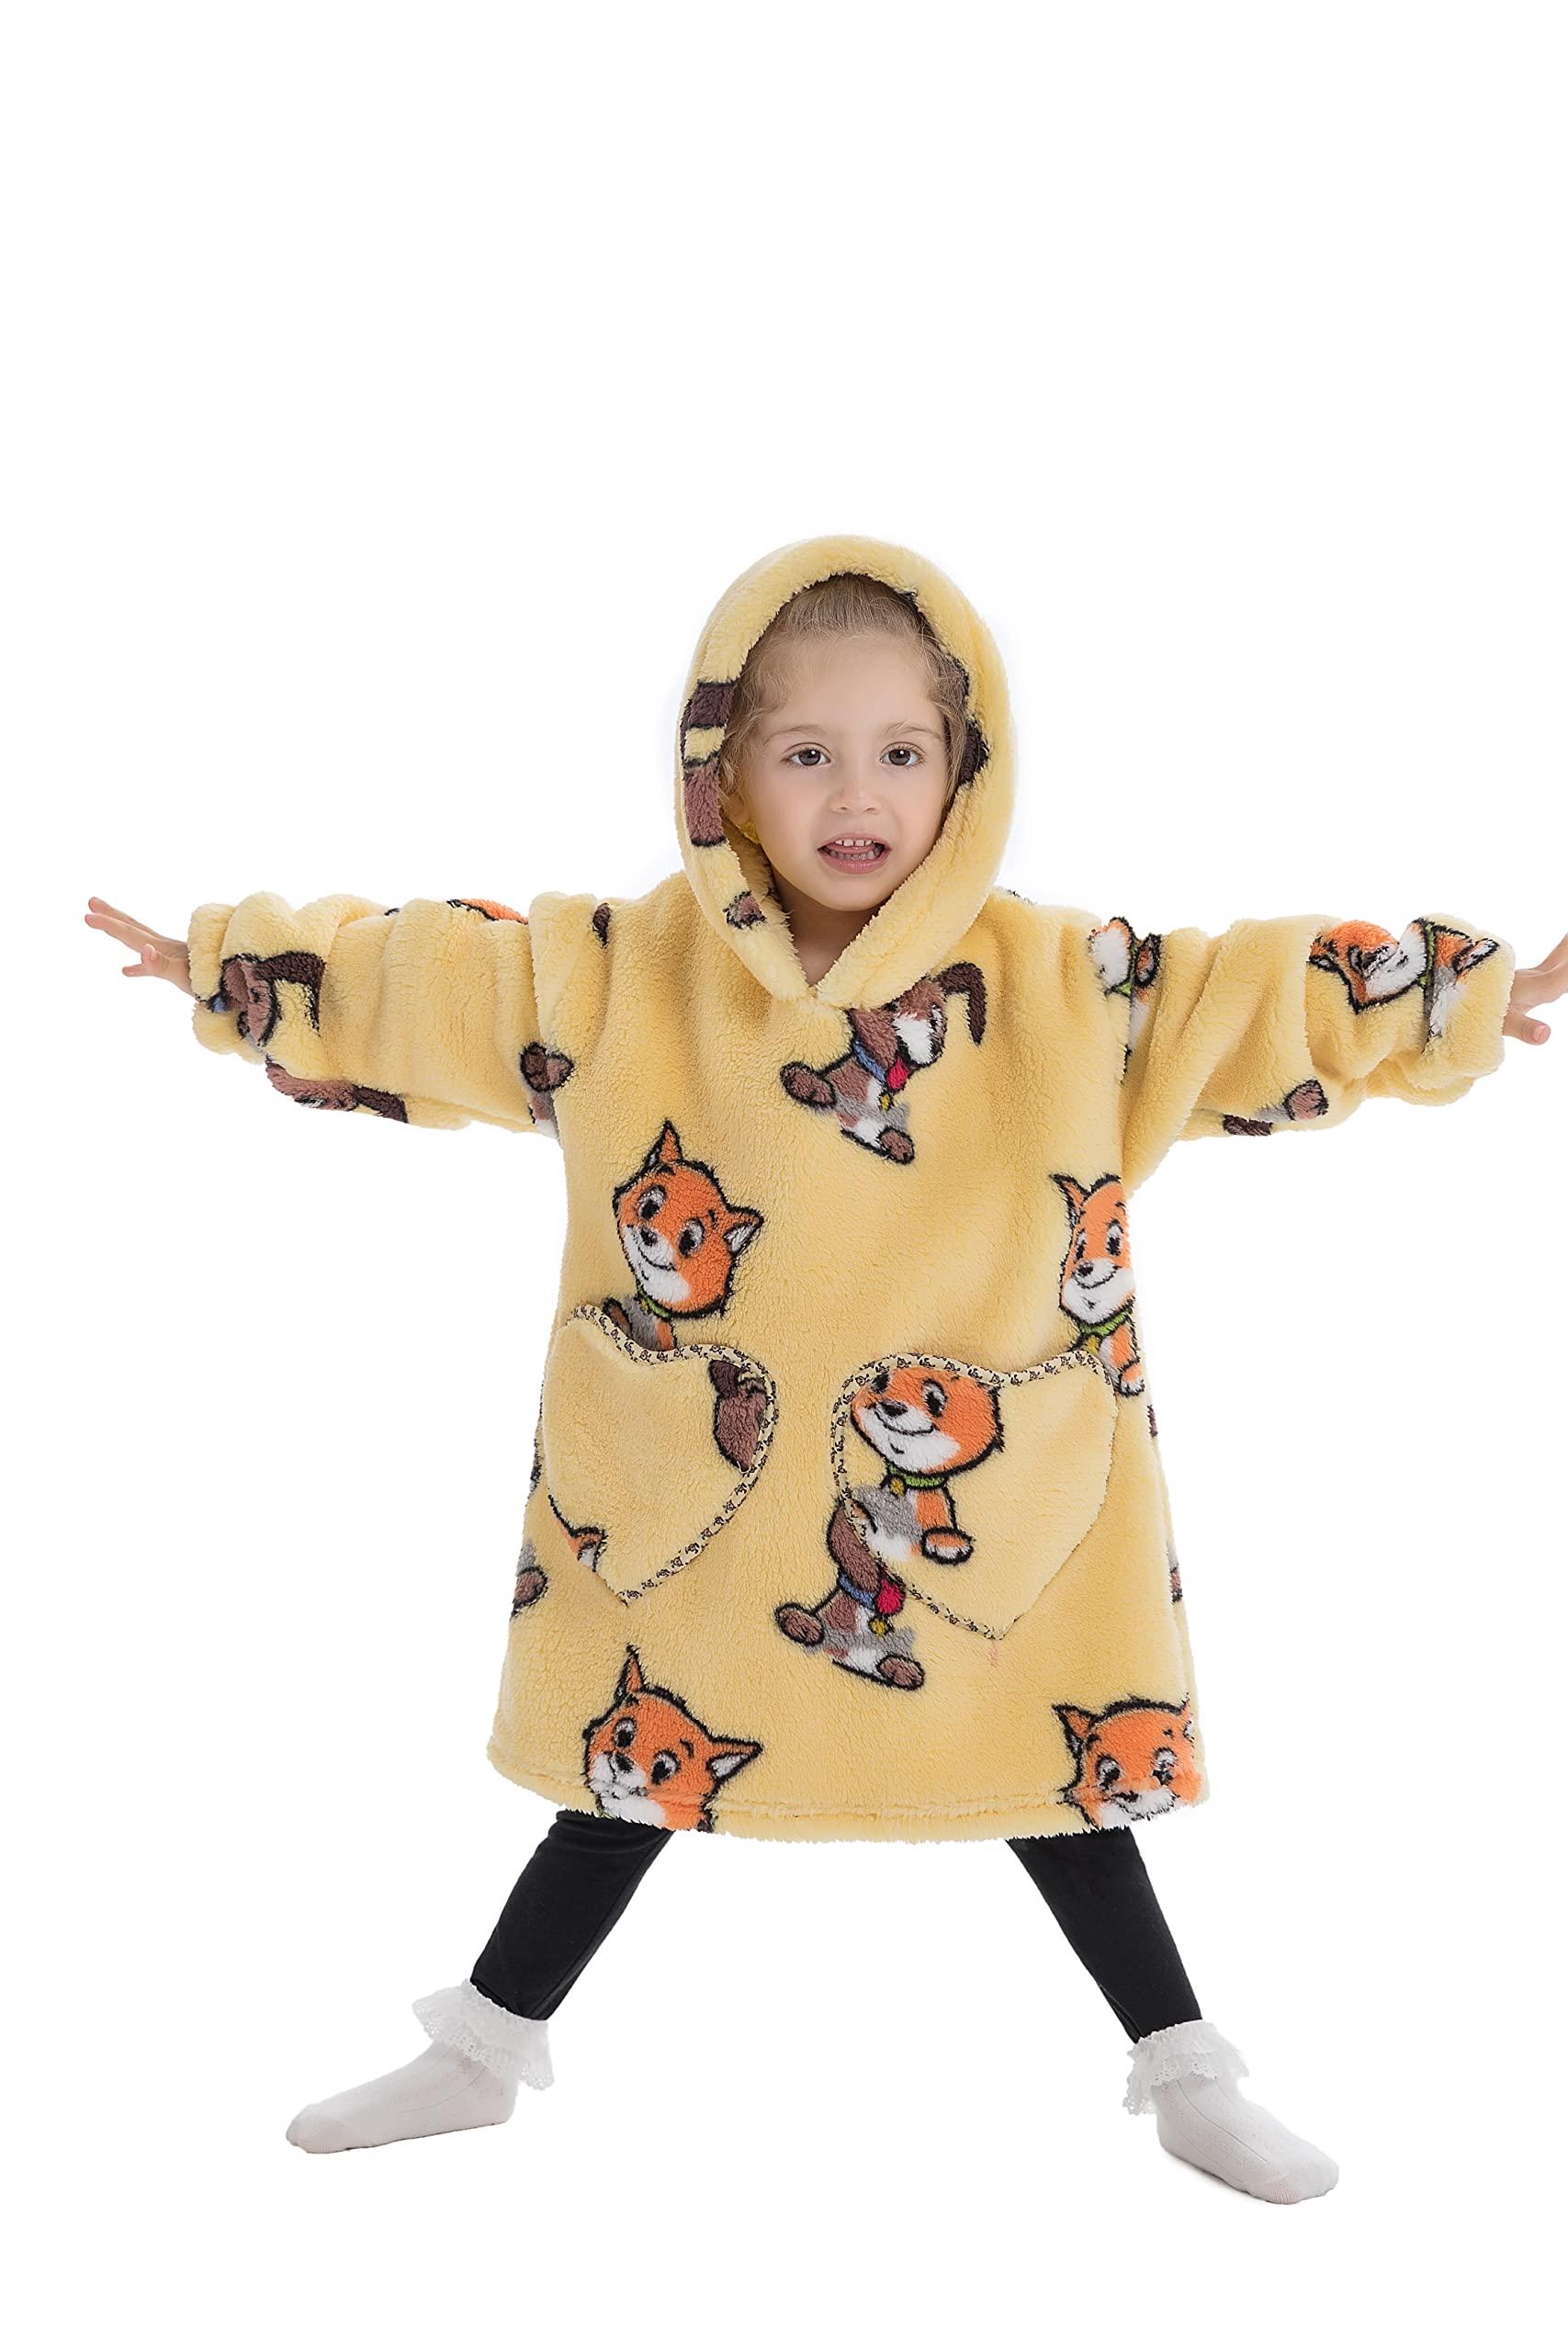 JULGIRL Kids Oversized Blanket Hoodie - Cute Animal Wearable Snuggle Hoodie Blanket for Kids, Super Soft & Warm Hooded Toddlers Blanket with Pockets for Girls Boys 2